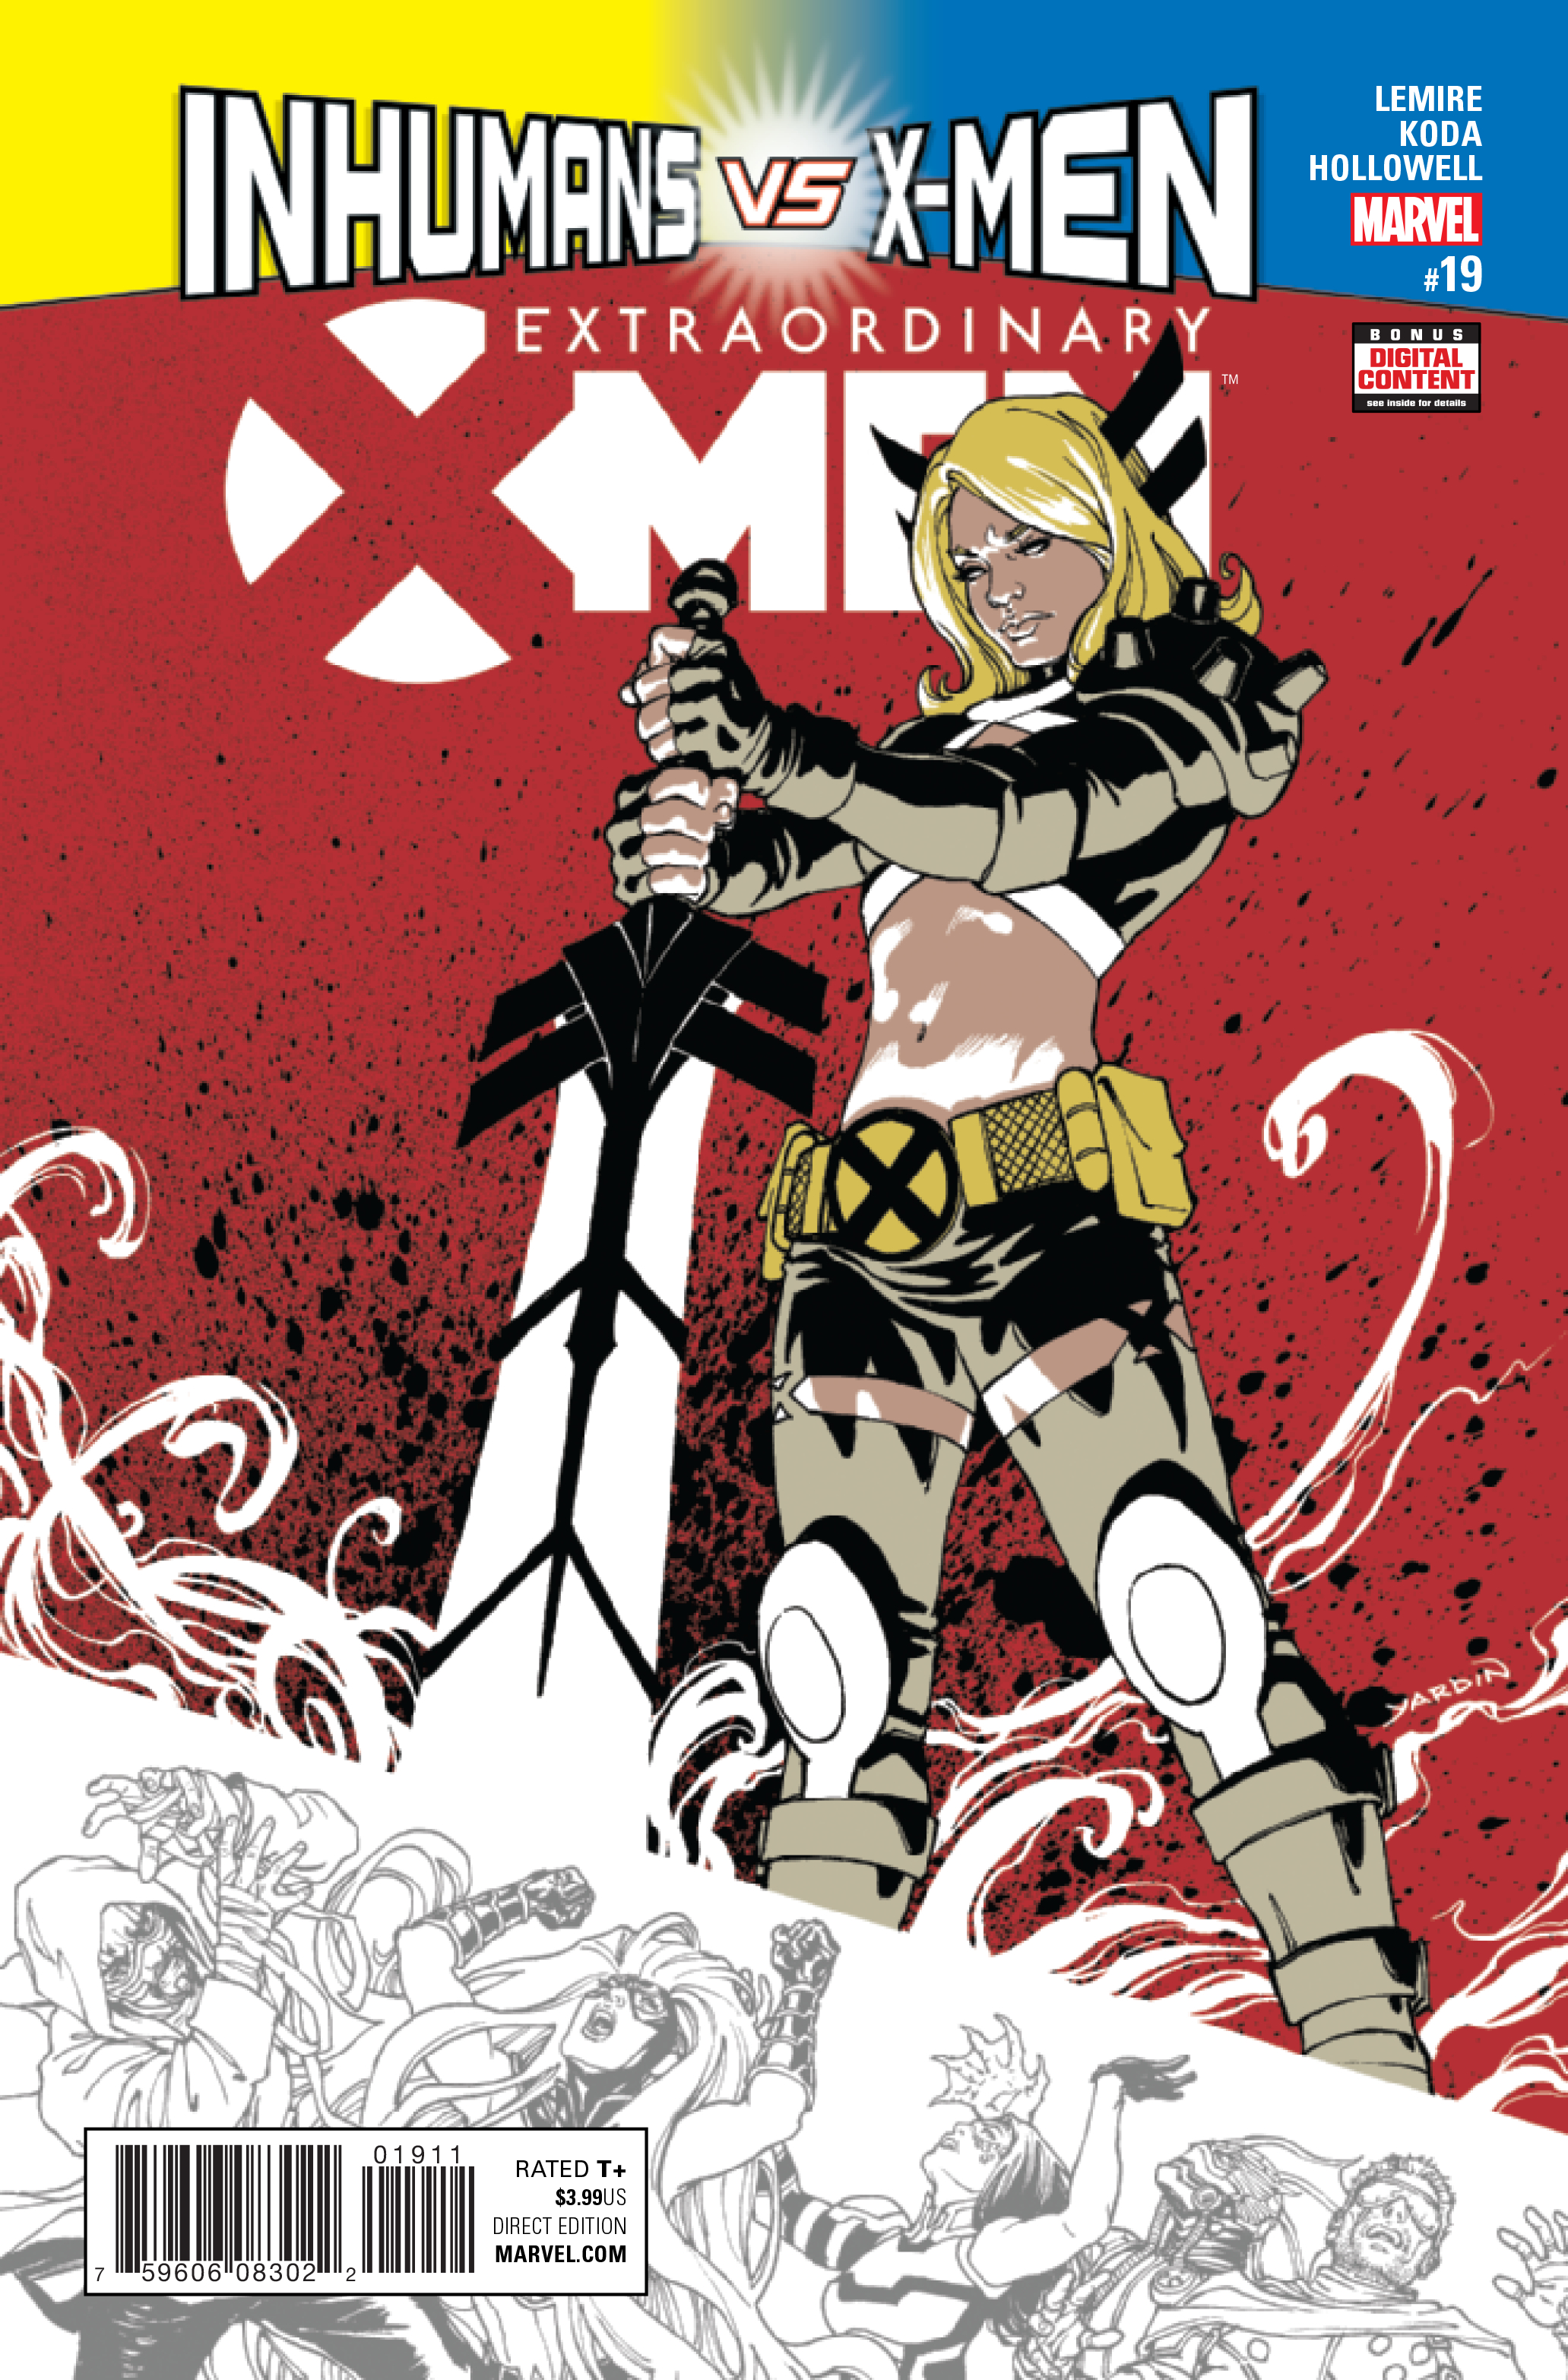 EXTRAORDINARY X-MEN #19 IVX